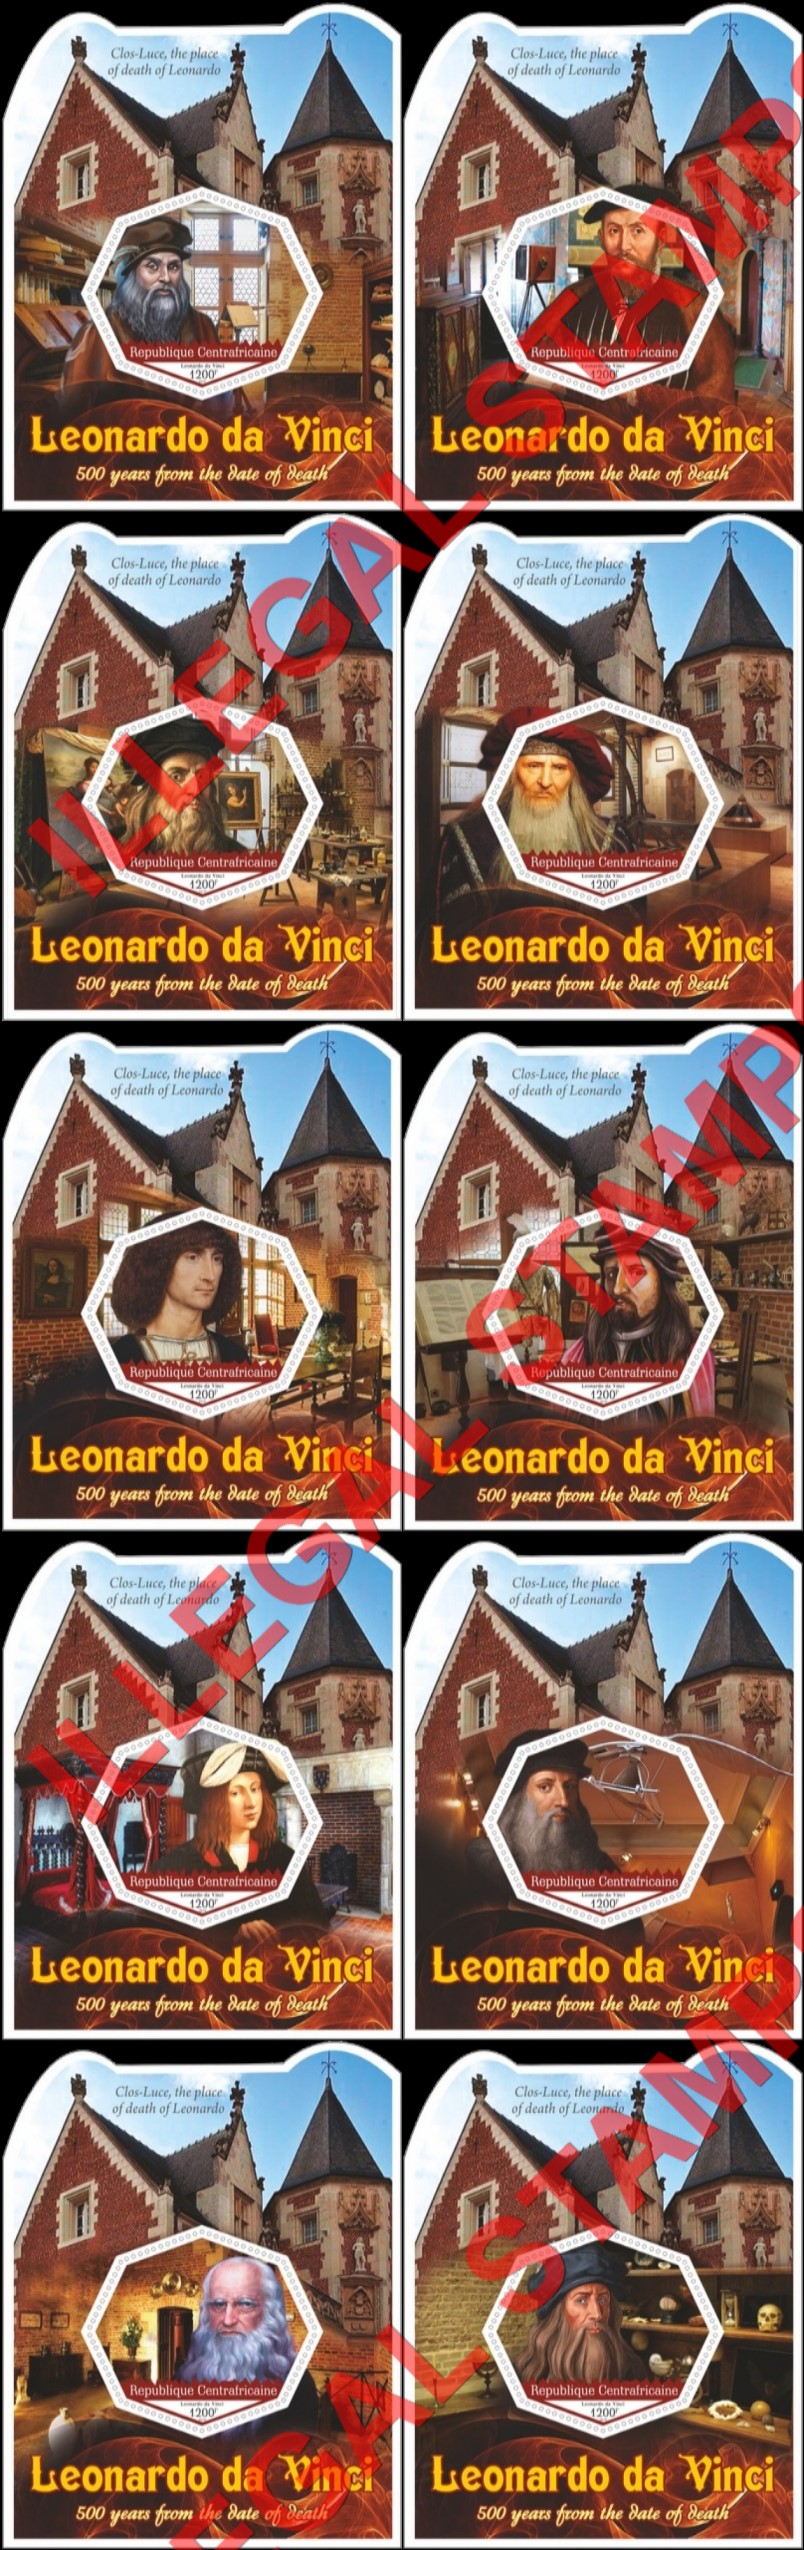 Central African Republic 2019 Leonardo da Vinci Illegal Stamp Souvenir Sheets of 1